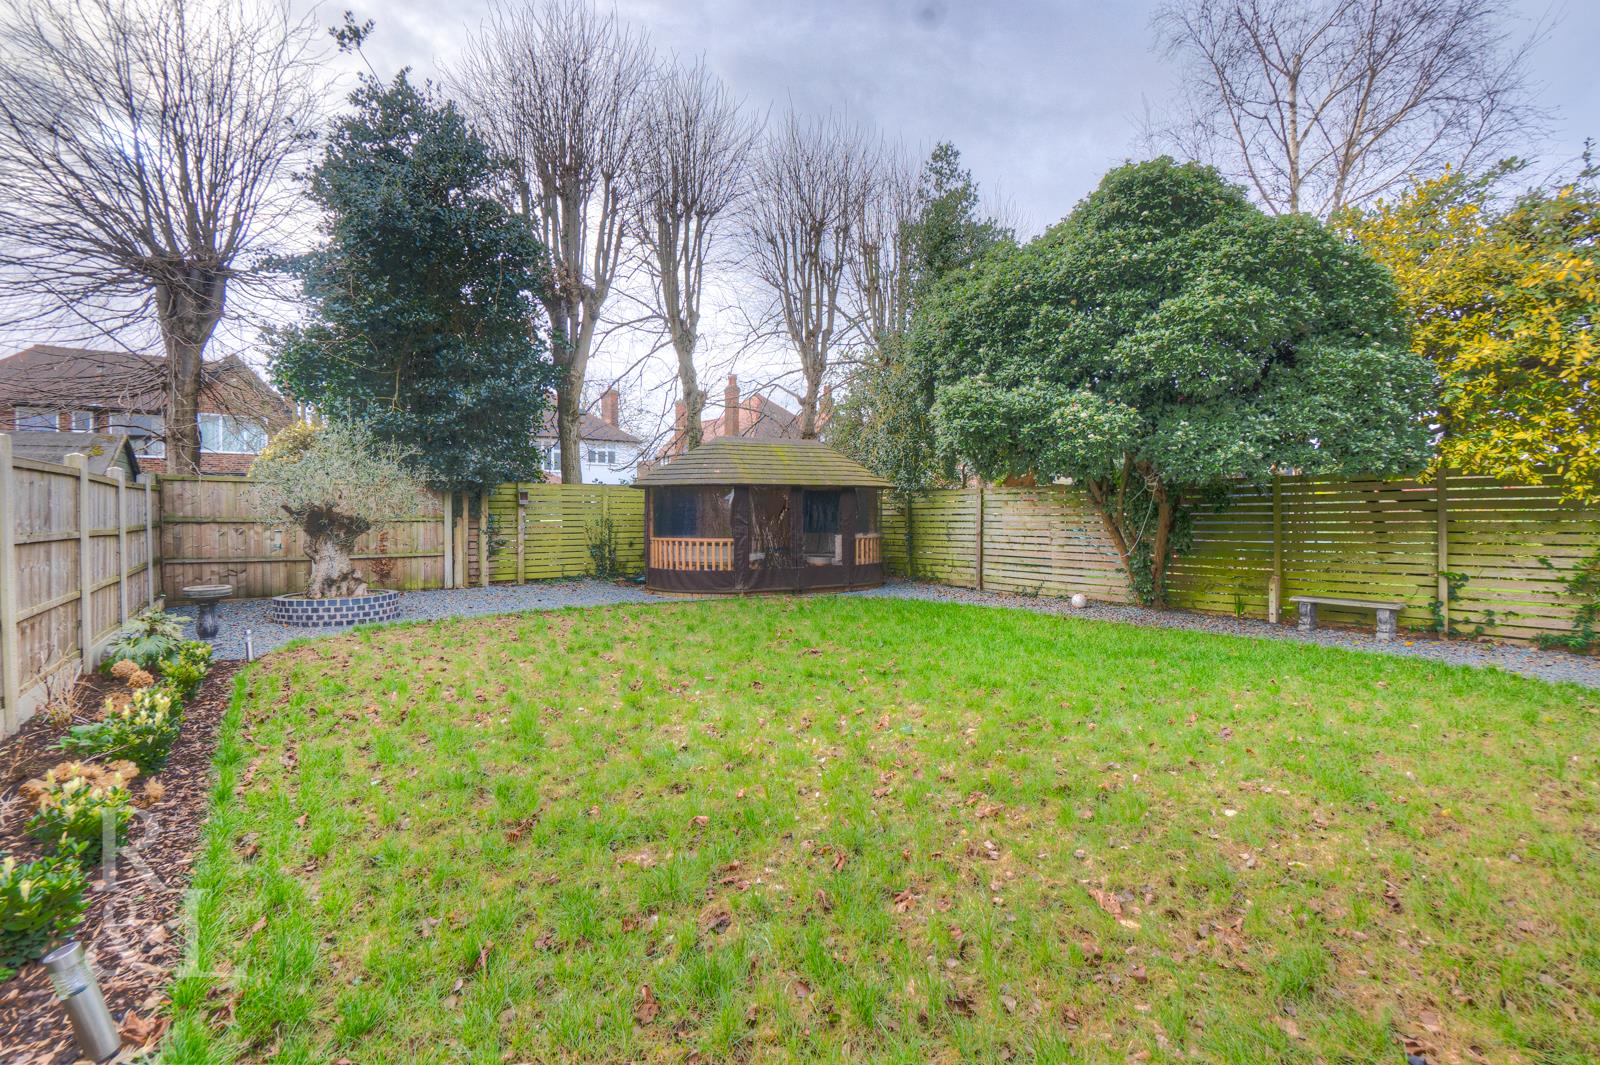 Property image for Florence Road, West Bridgford, Nottingham